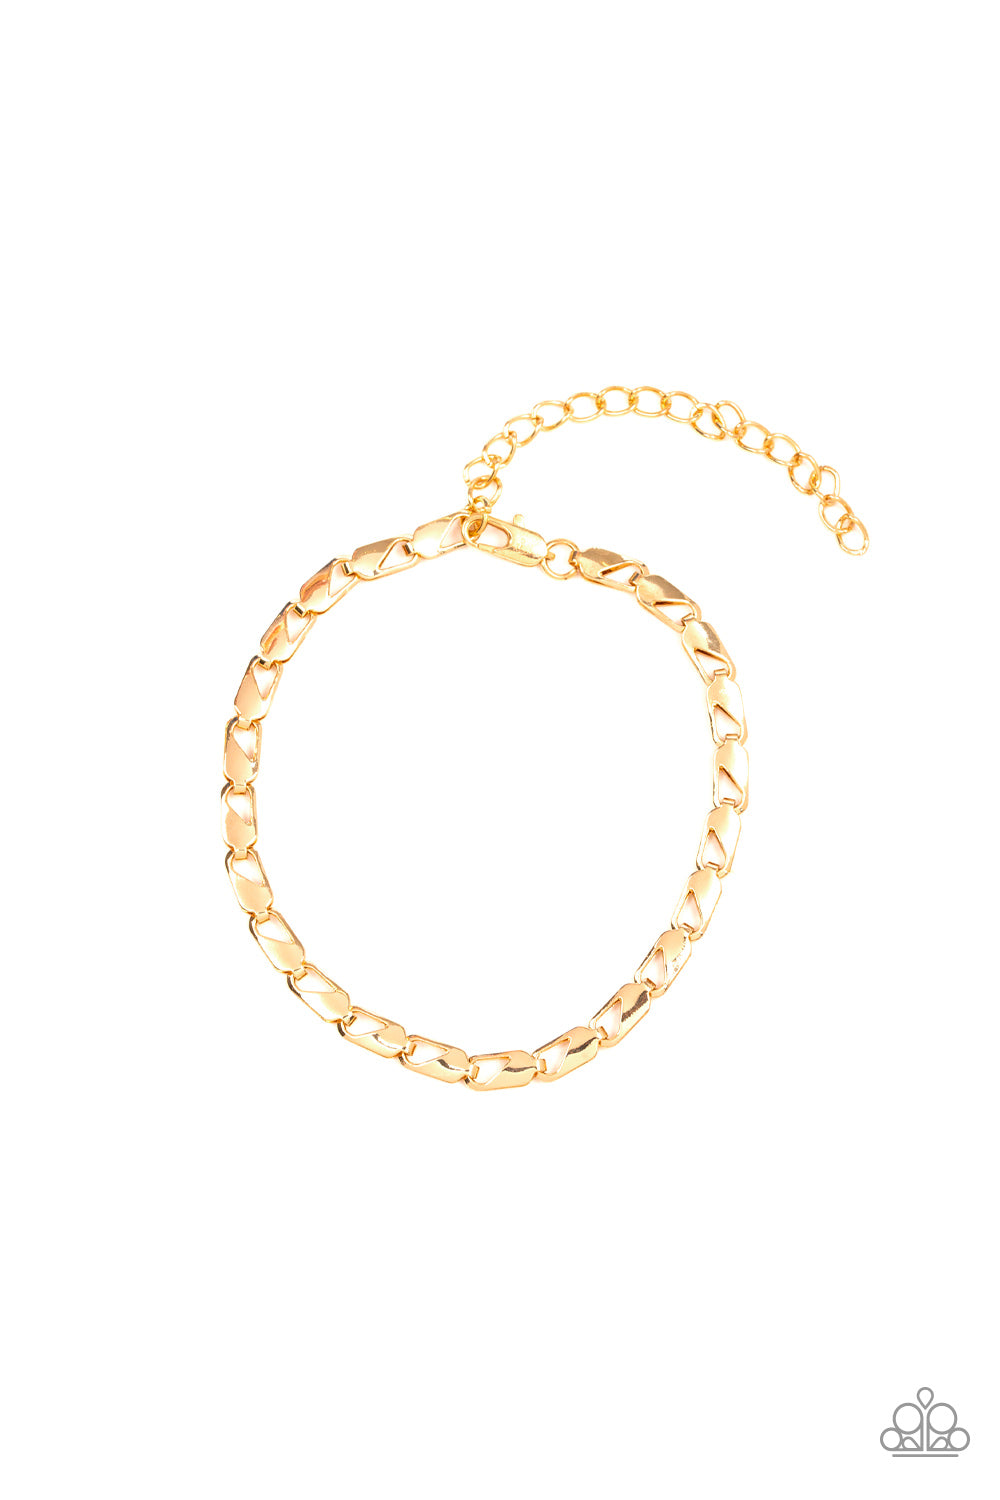 K.O. - Gold Men's Bracelet